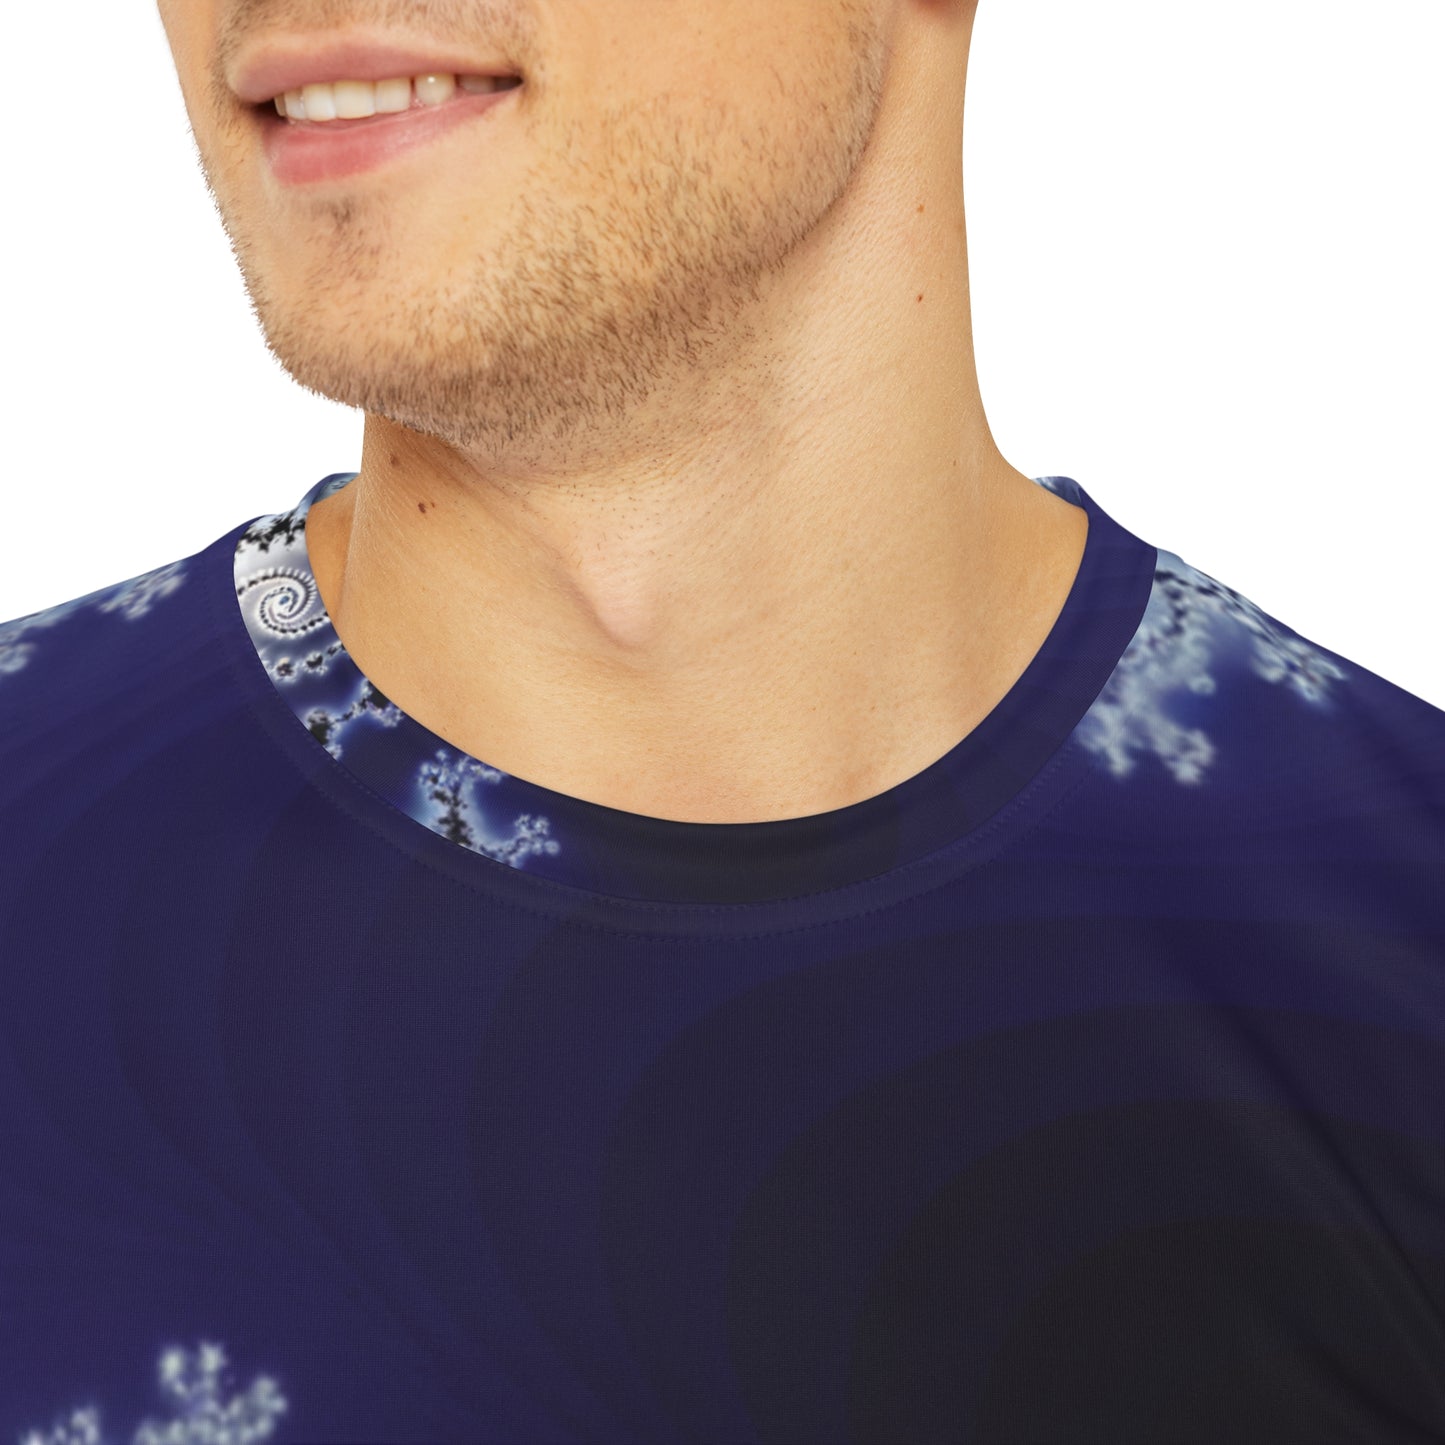 Close-up shot of the Celestial Fractal Elegance Crewneck Pullover All-Over Print Short-Sleeved Shirt purple black white fractal pattern worn by a white man